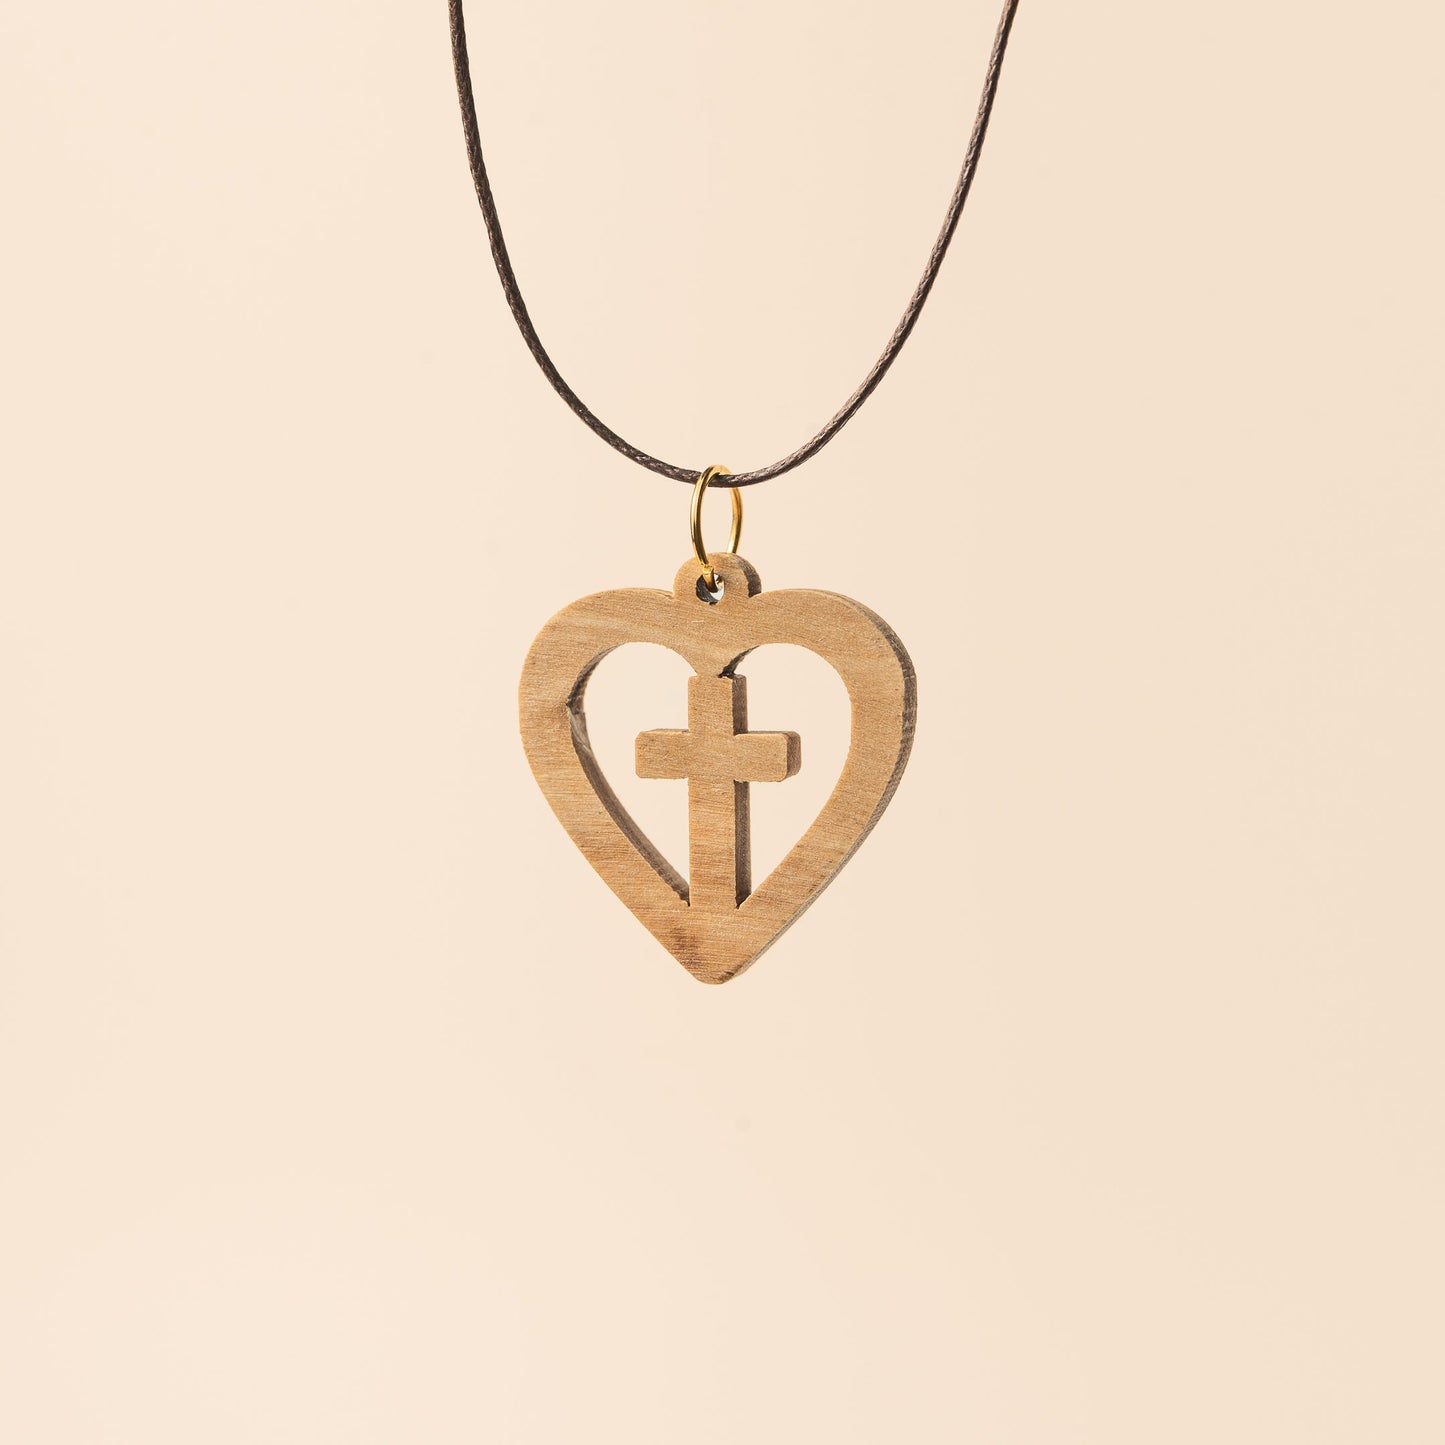 Heart pendant on cord